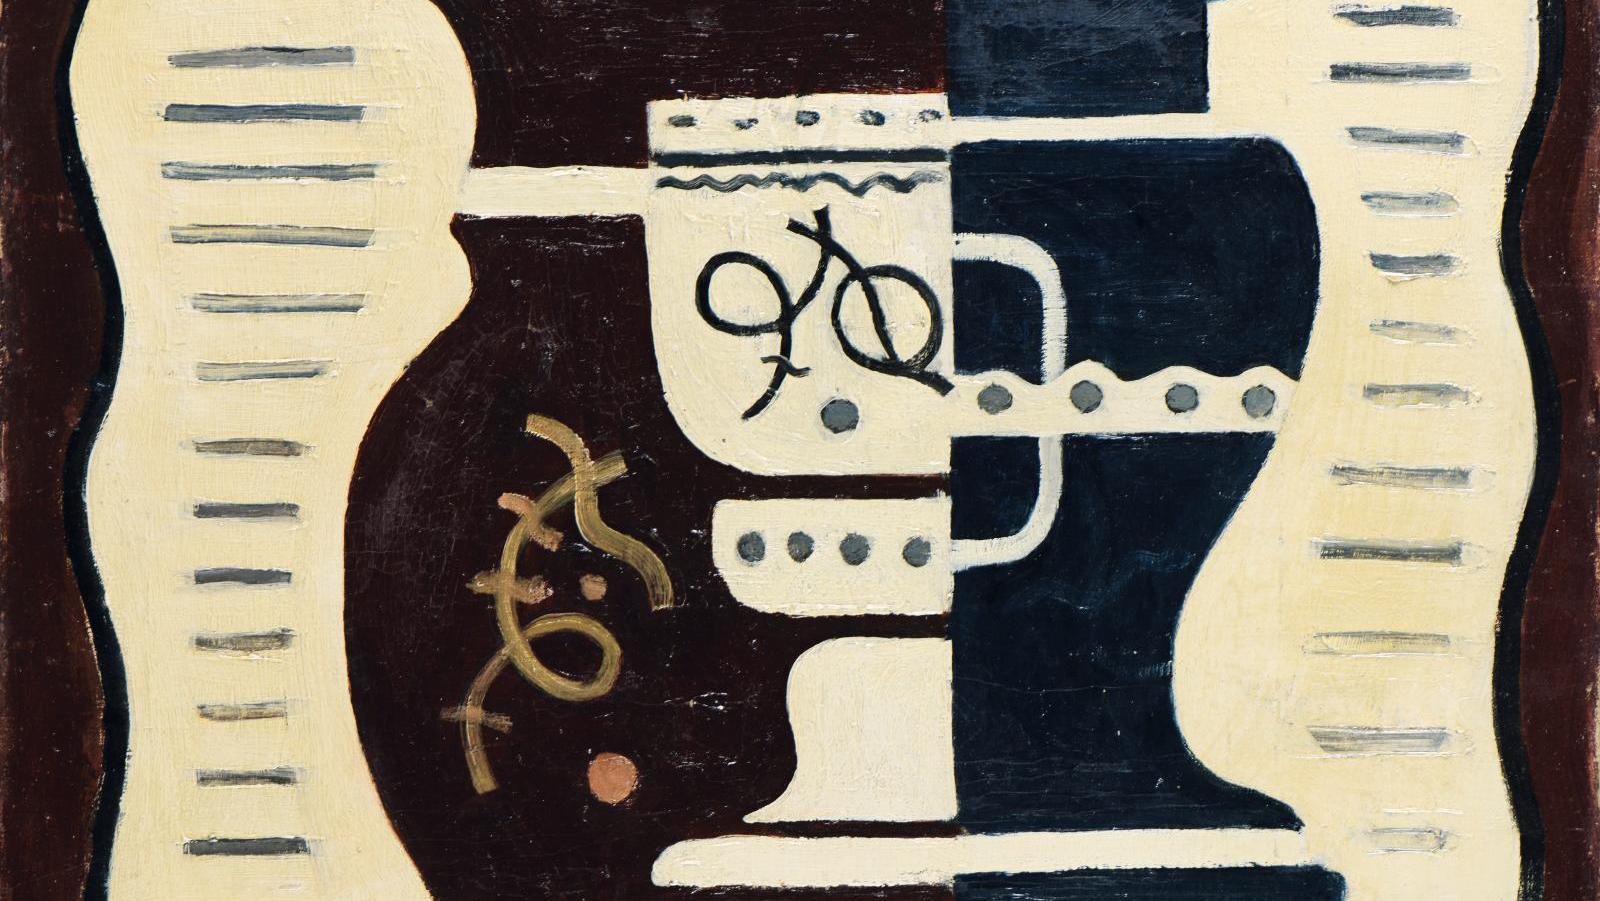 Fernand Léger's Contrasting Rhythms